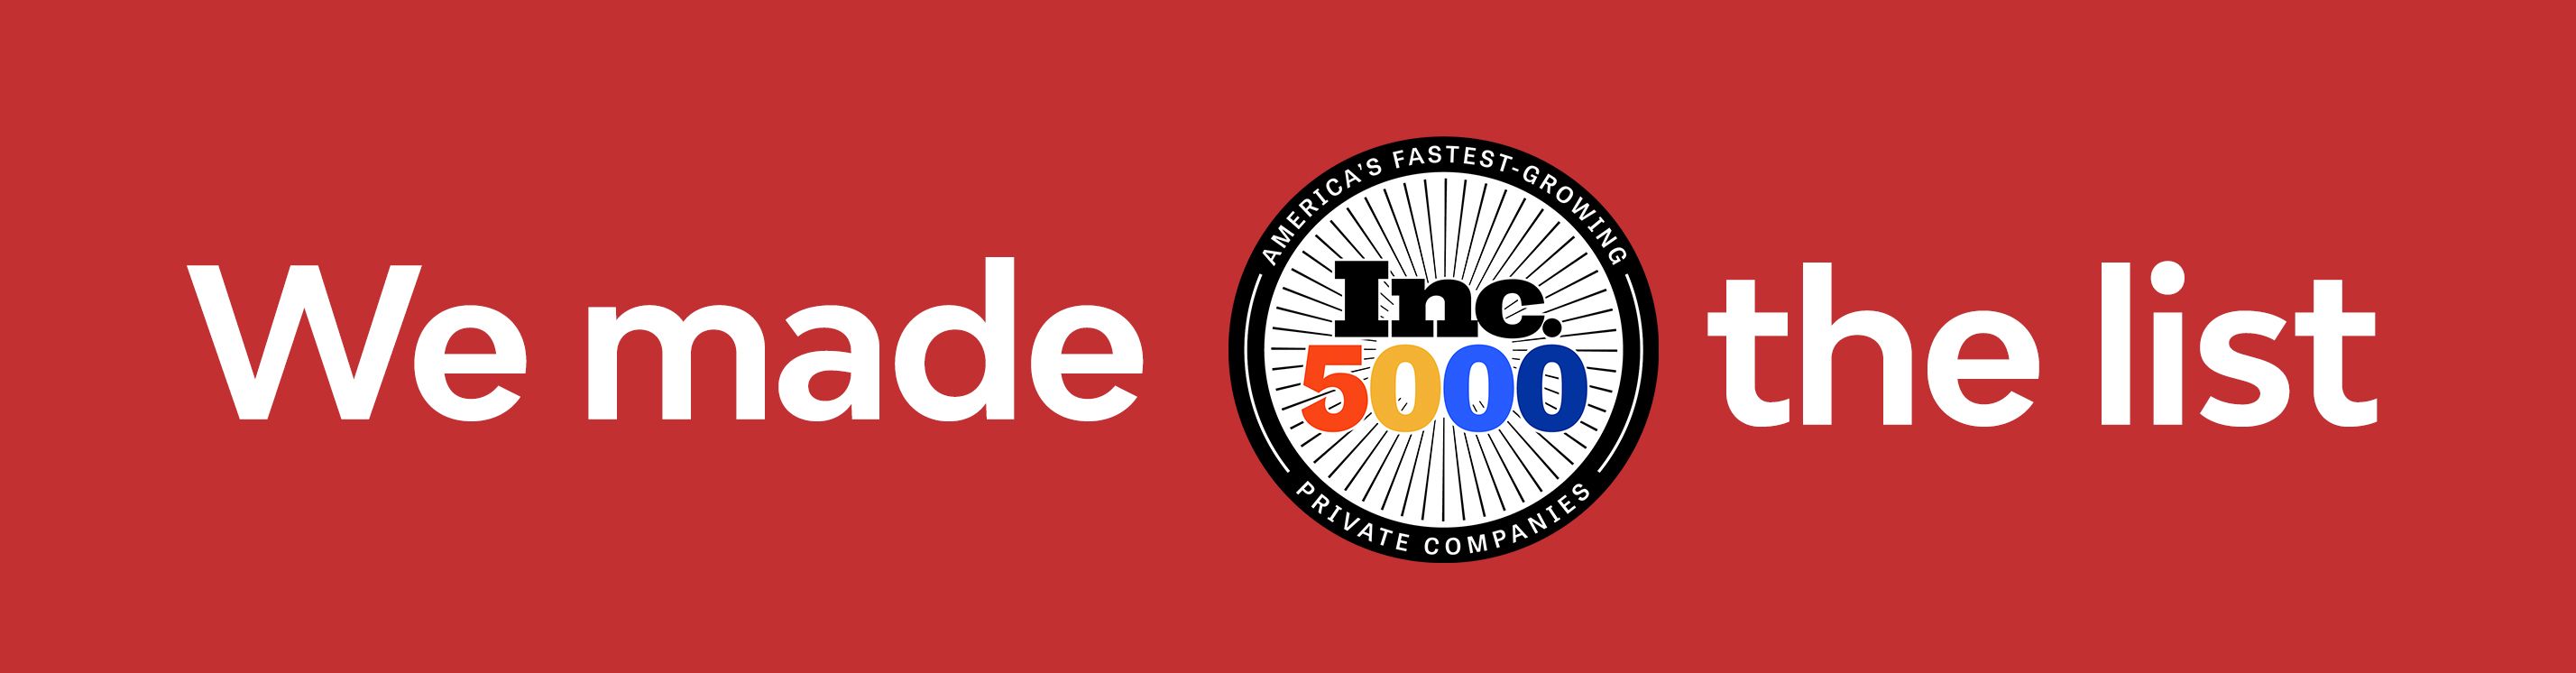 We made the Inc. 5000 list!